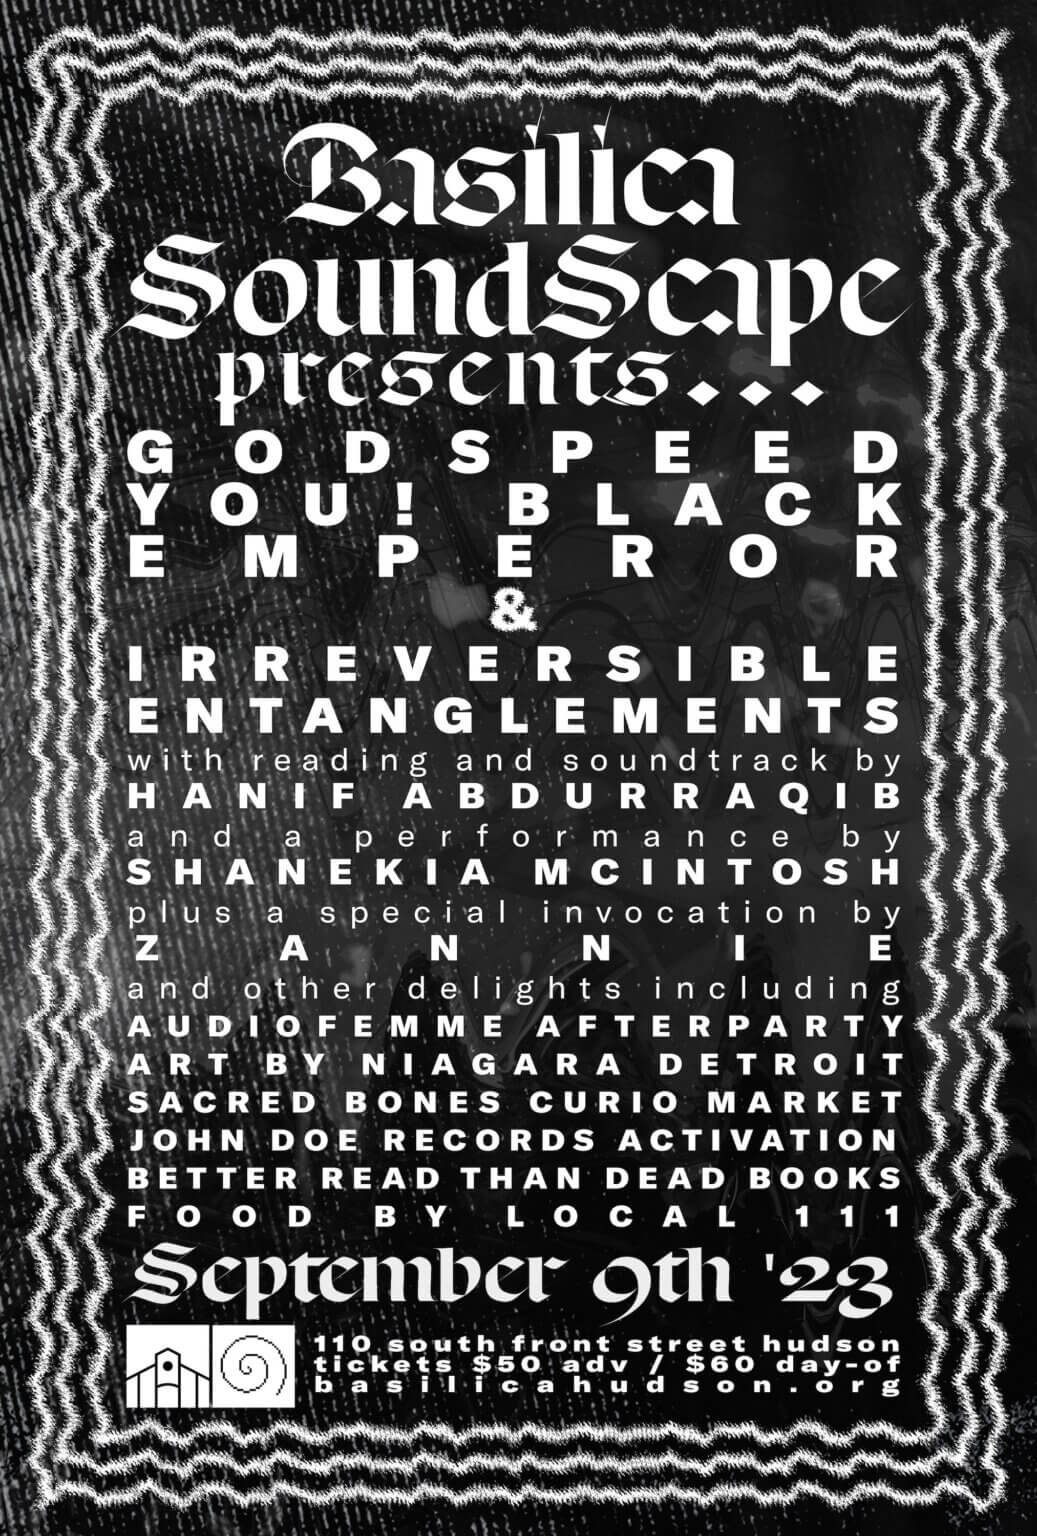 Basilica SoundScape Presents Irreversible Entanglements, Godspeed You! Black Emperor, Hanif Abdurraqib + more September 9th